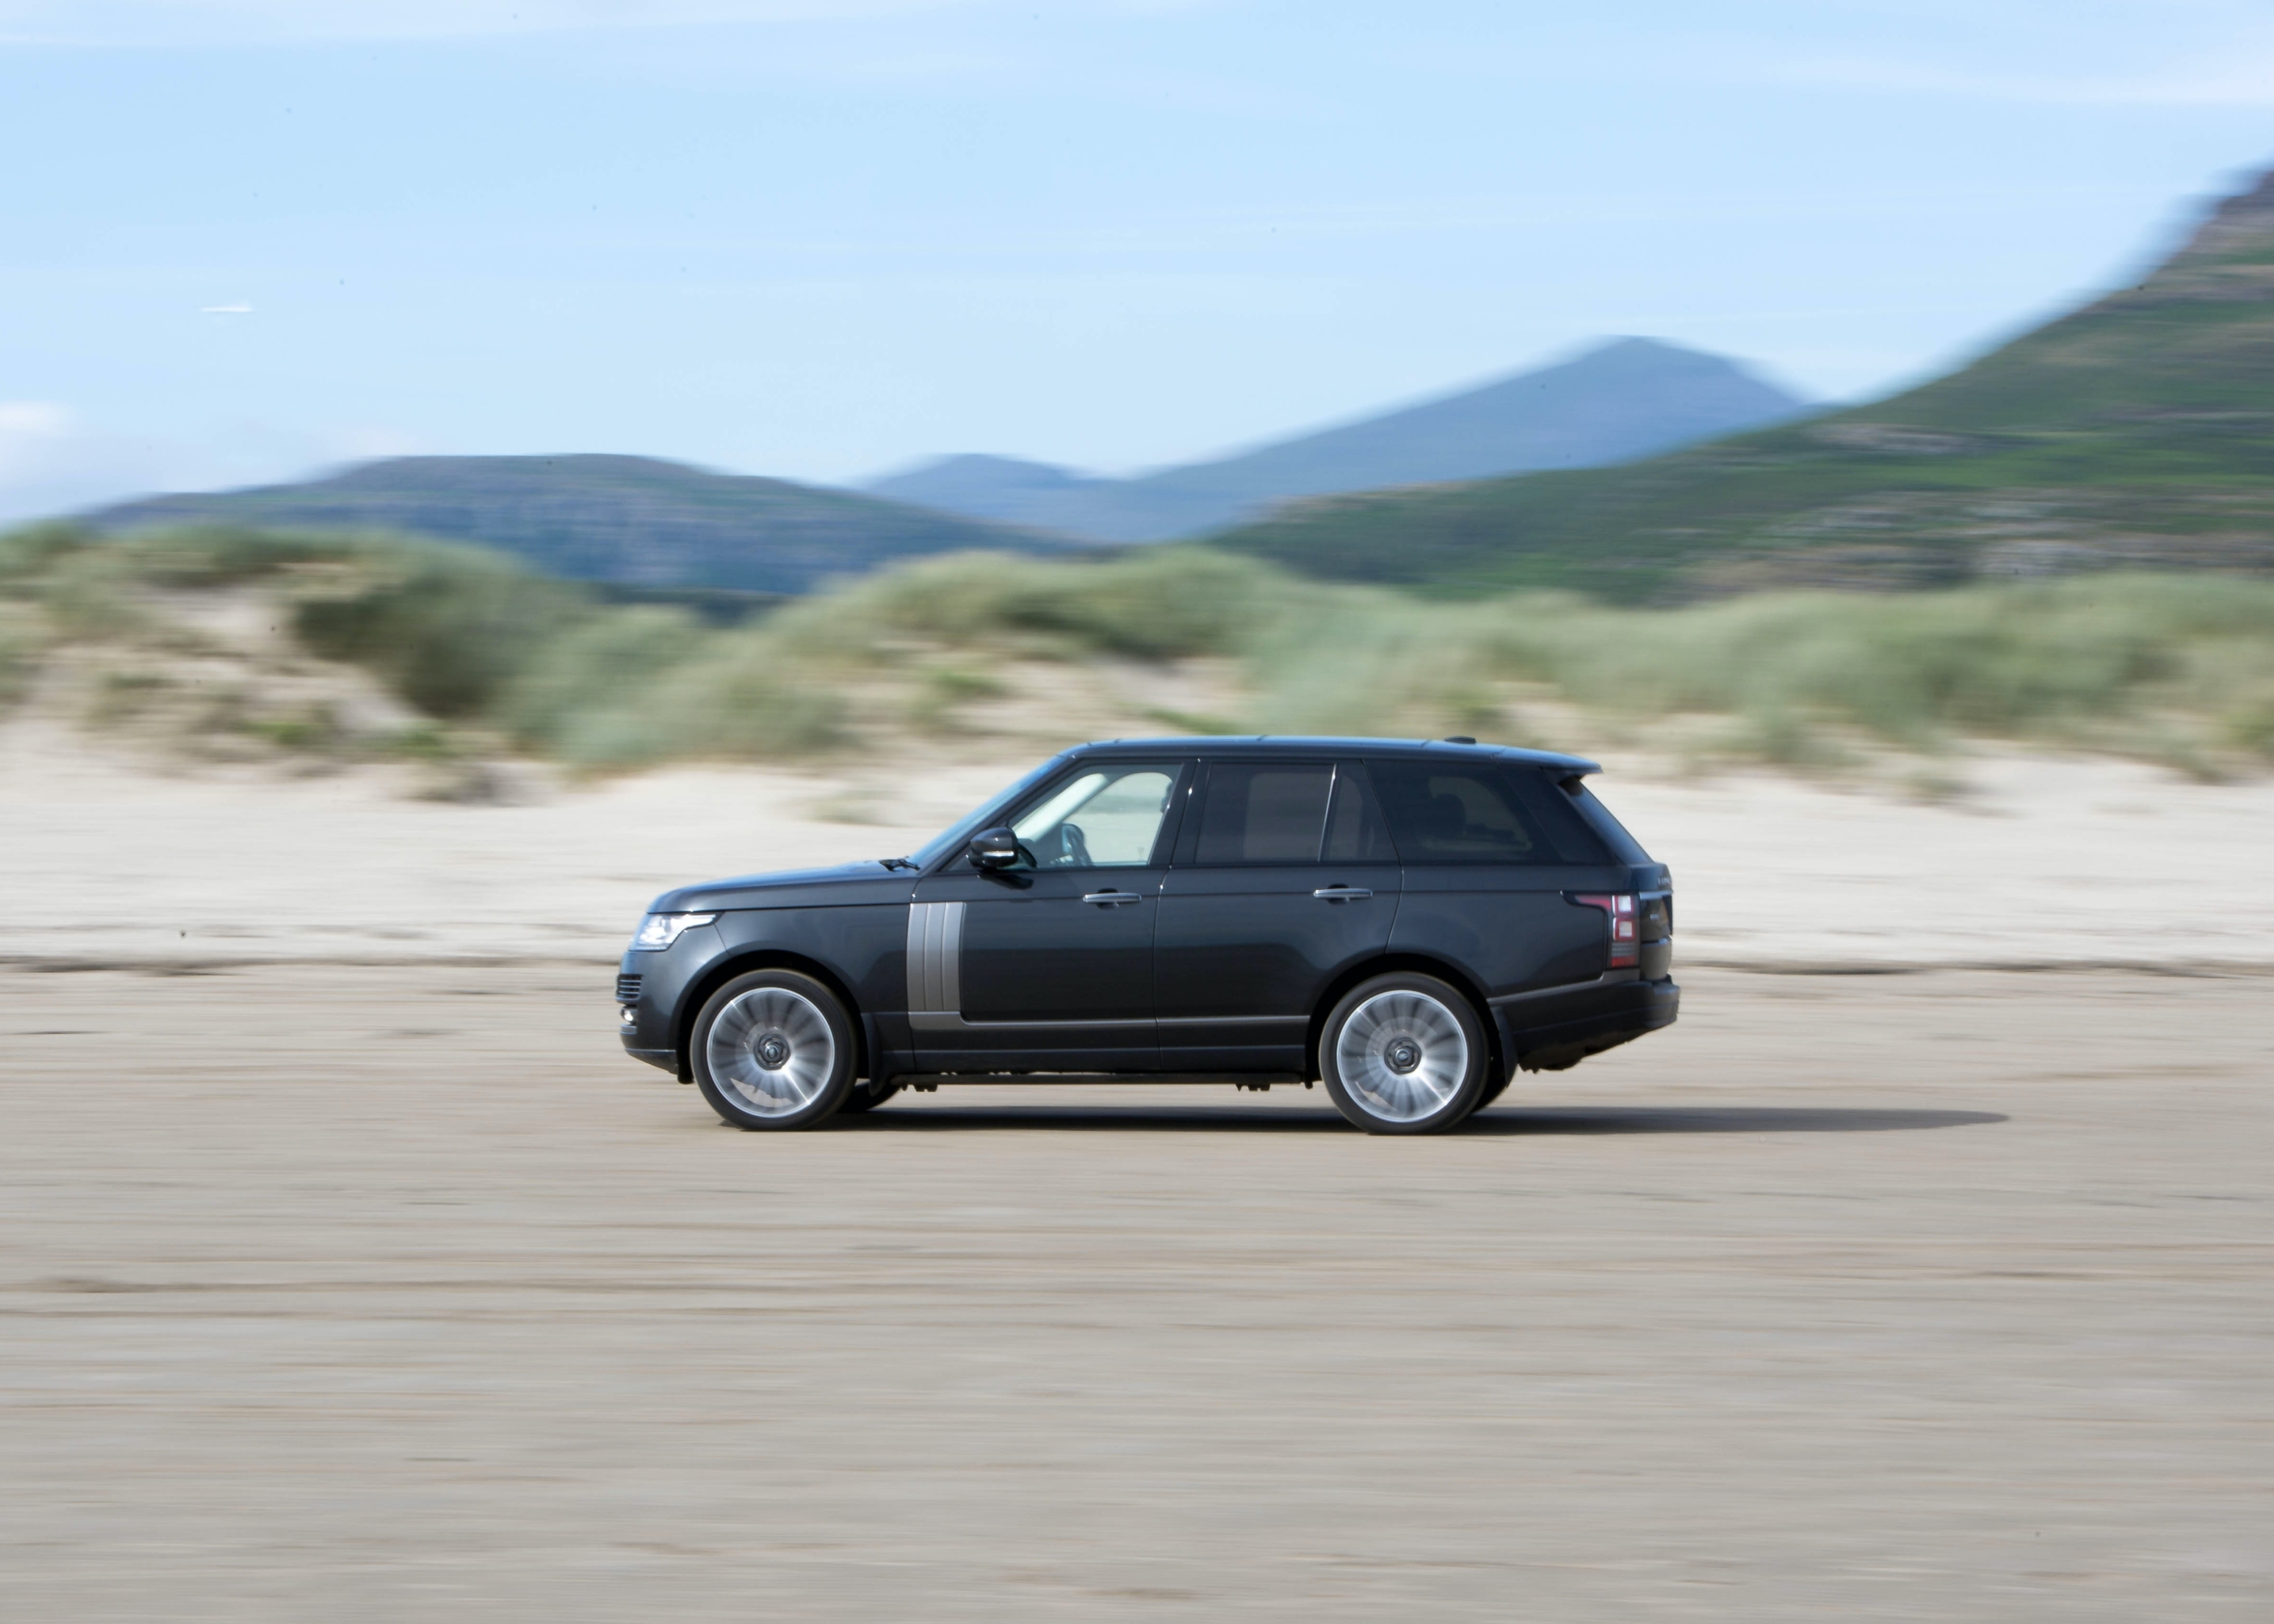 Range Rover reliability